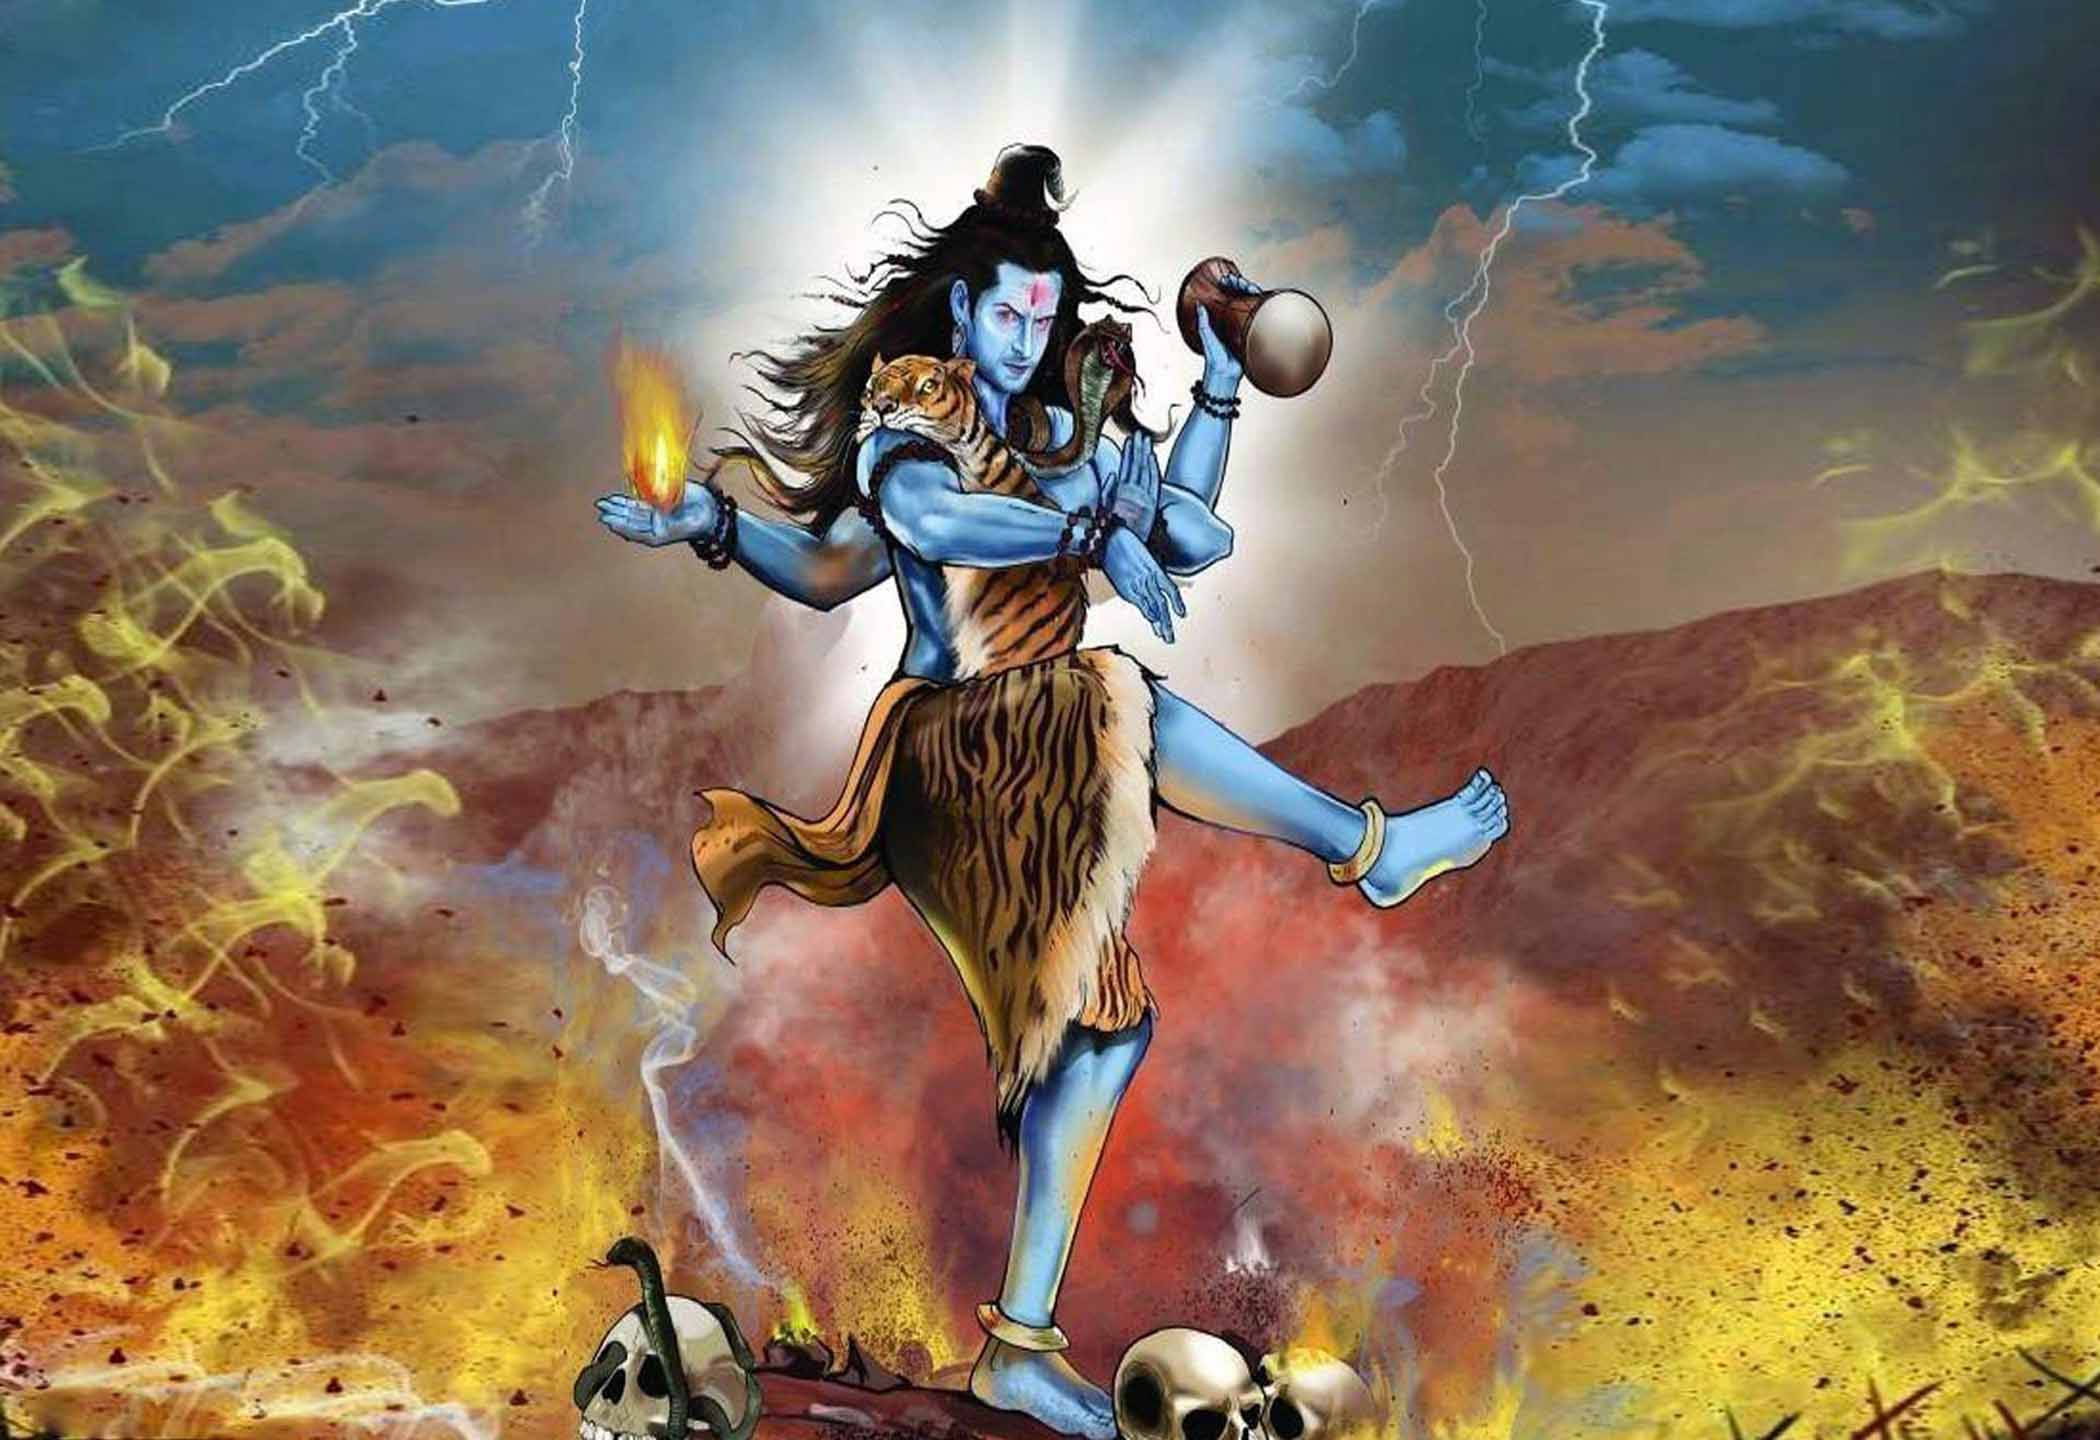 Divine Rhythm Of Destruction - Lord Shiva Performing The Tandav Dance